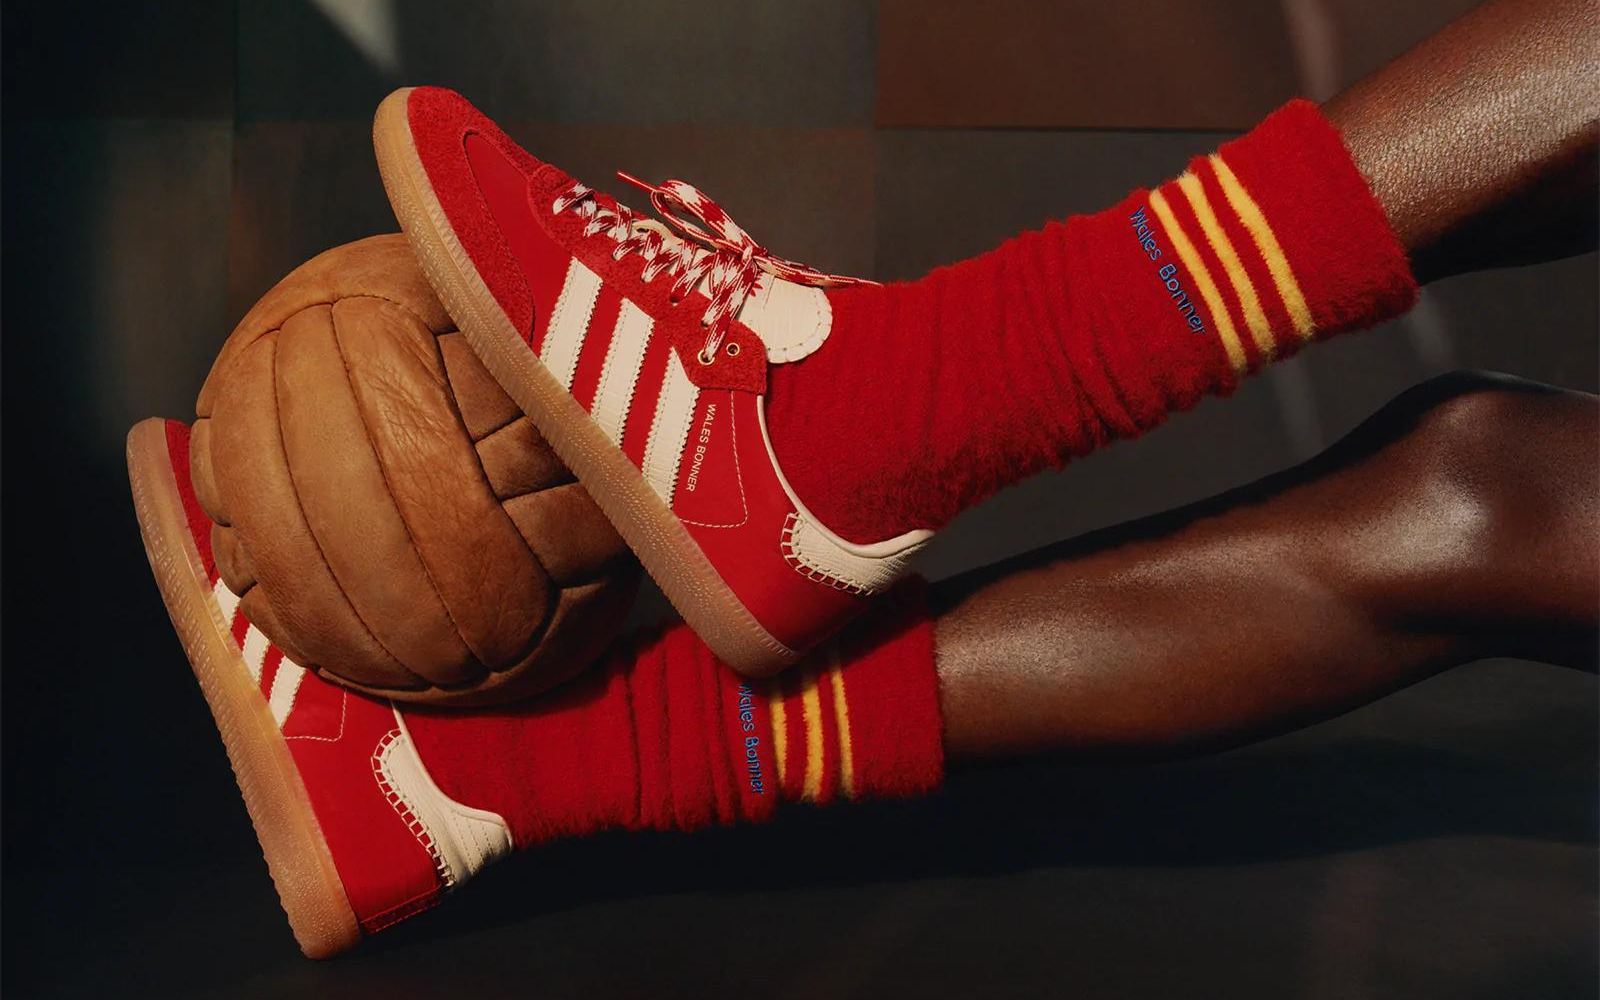 How the classic Adidas Samba became desirable again